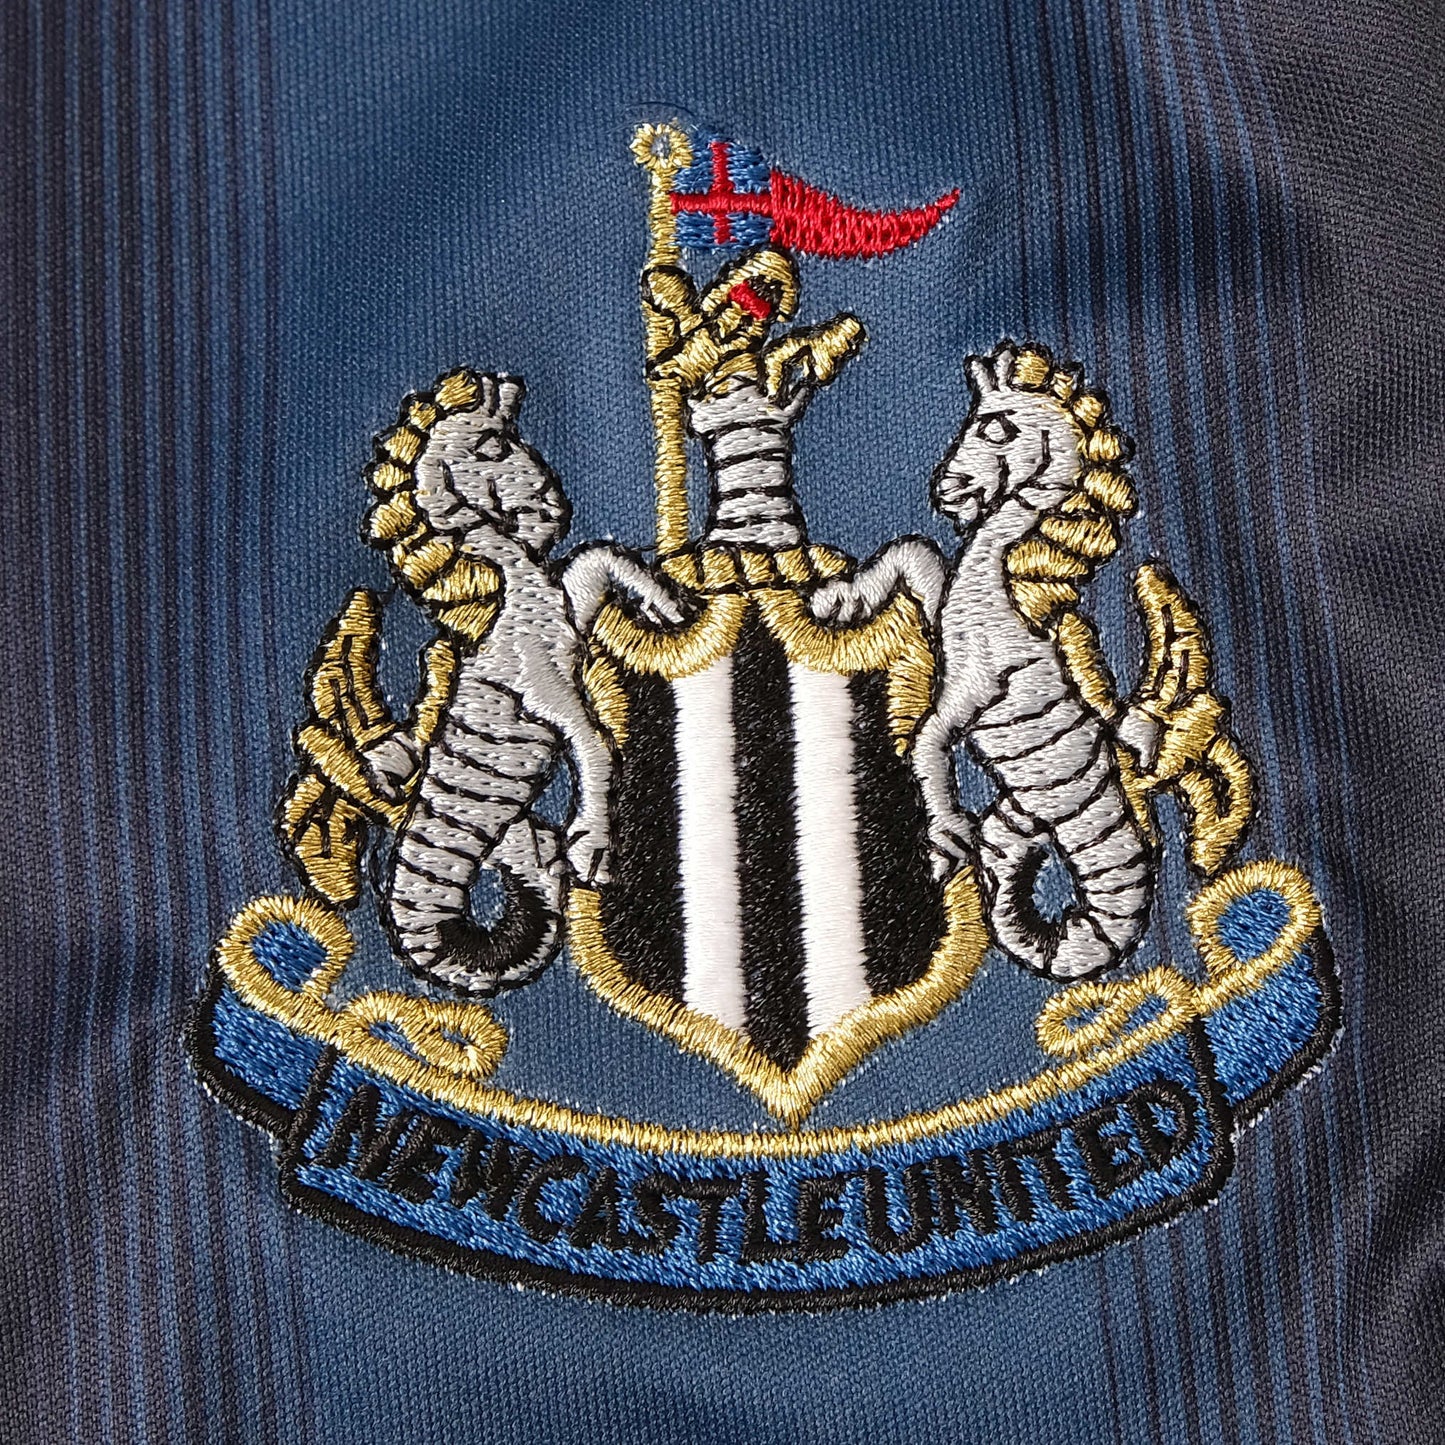 Newcastle United 04-05 Away Shirt